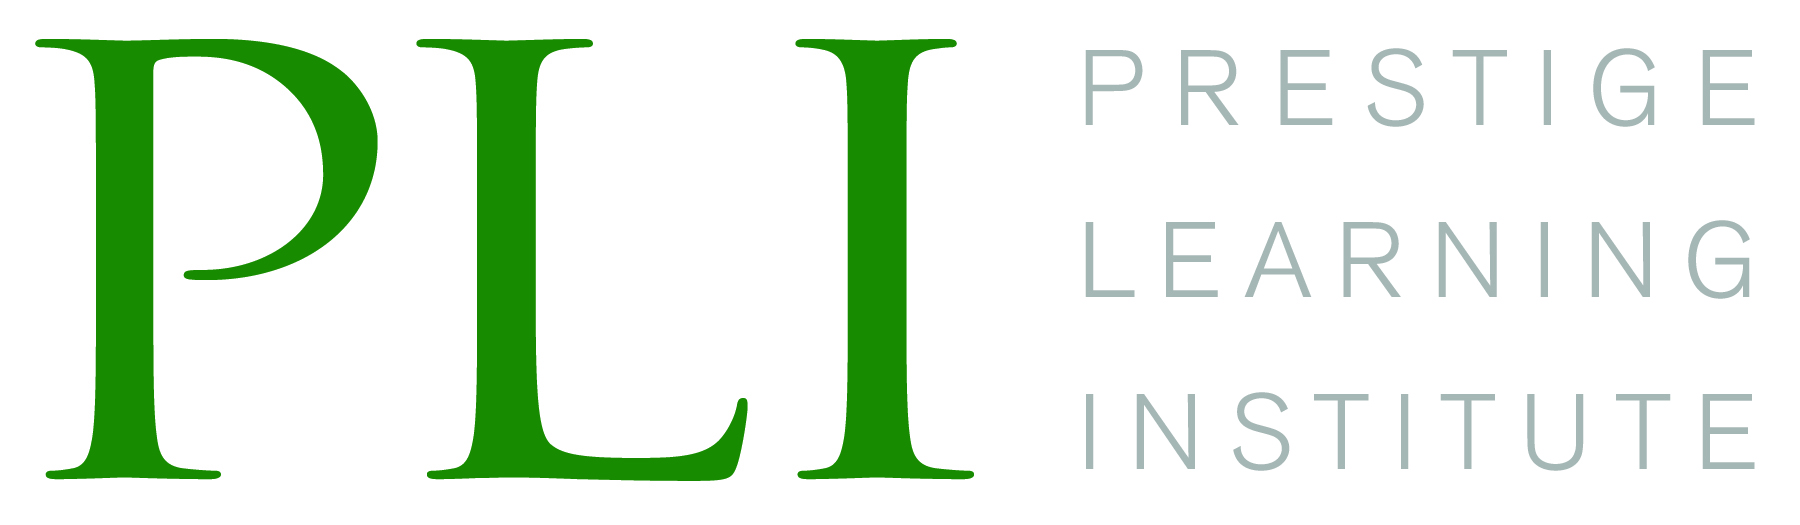 Prestige Learning Institute logo